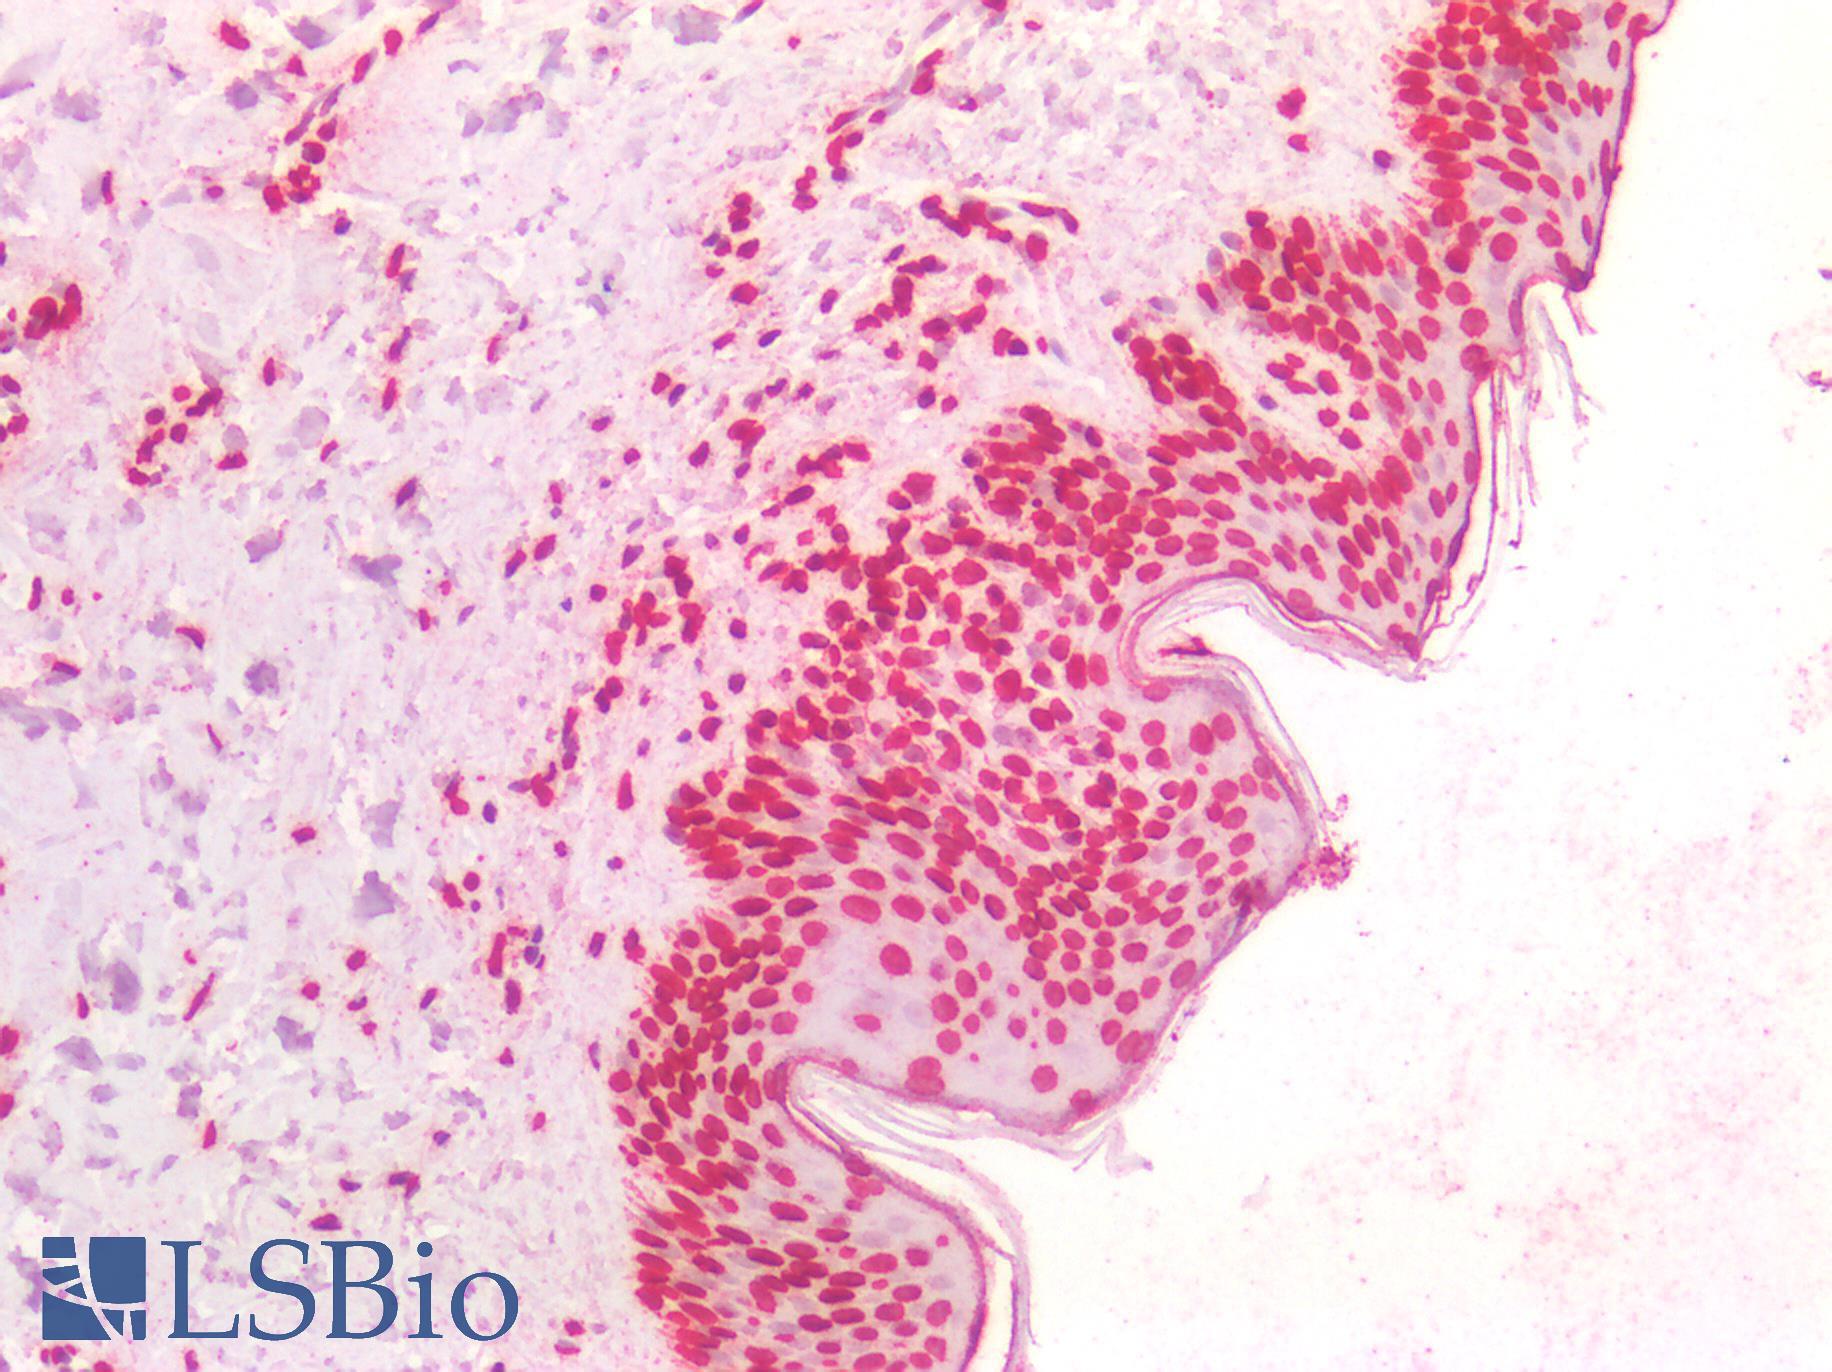 BRCA1 Antibody - Human Skin: Formalin-Fixed, Paraffin-Embedded (FFPE)